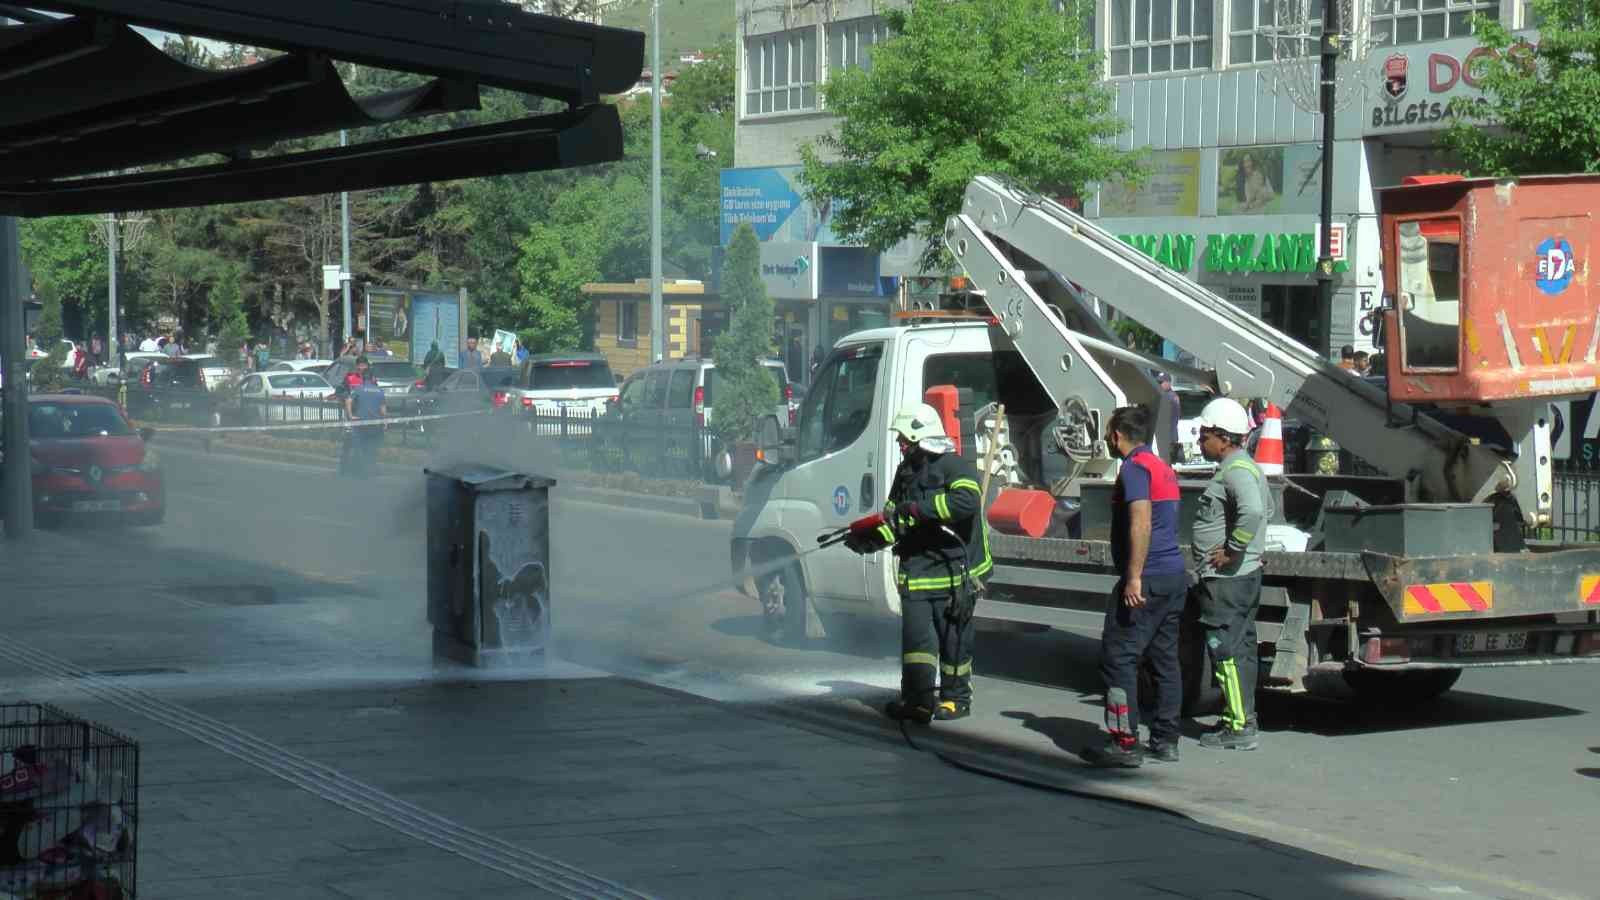 Nevşehir’de patlayan trafo paniğe neden oldu